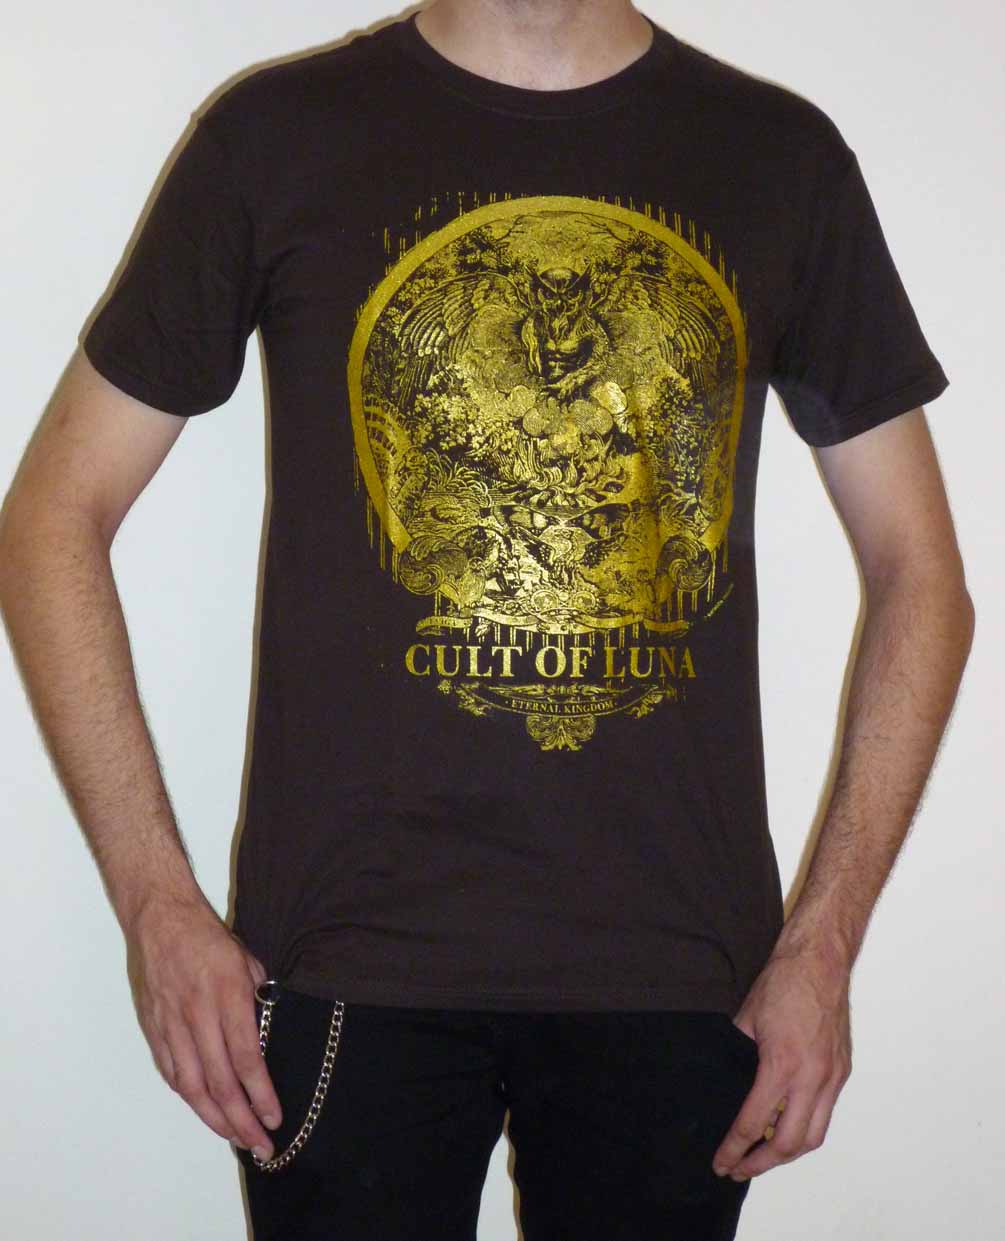 Cult Of Luna "Eternal Kingdom" Brown T-shirt